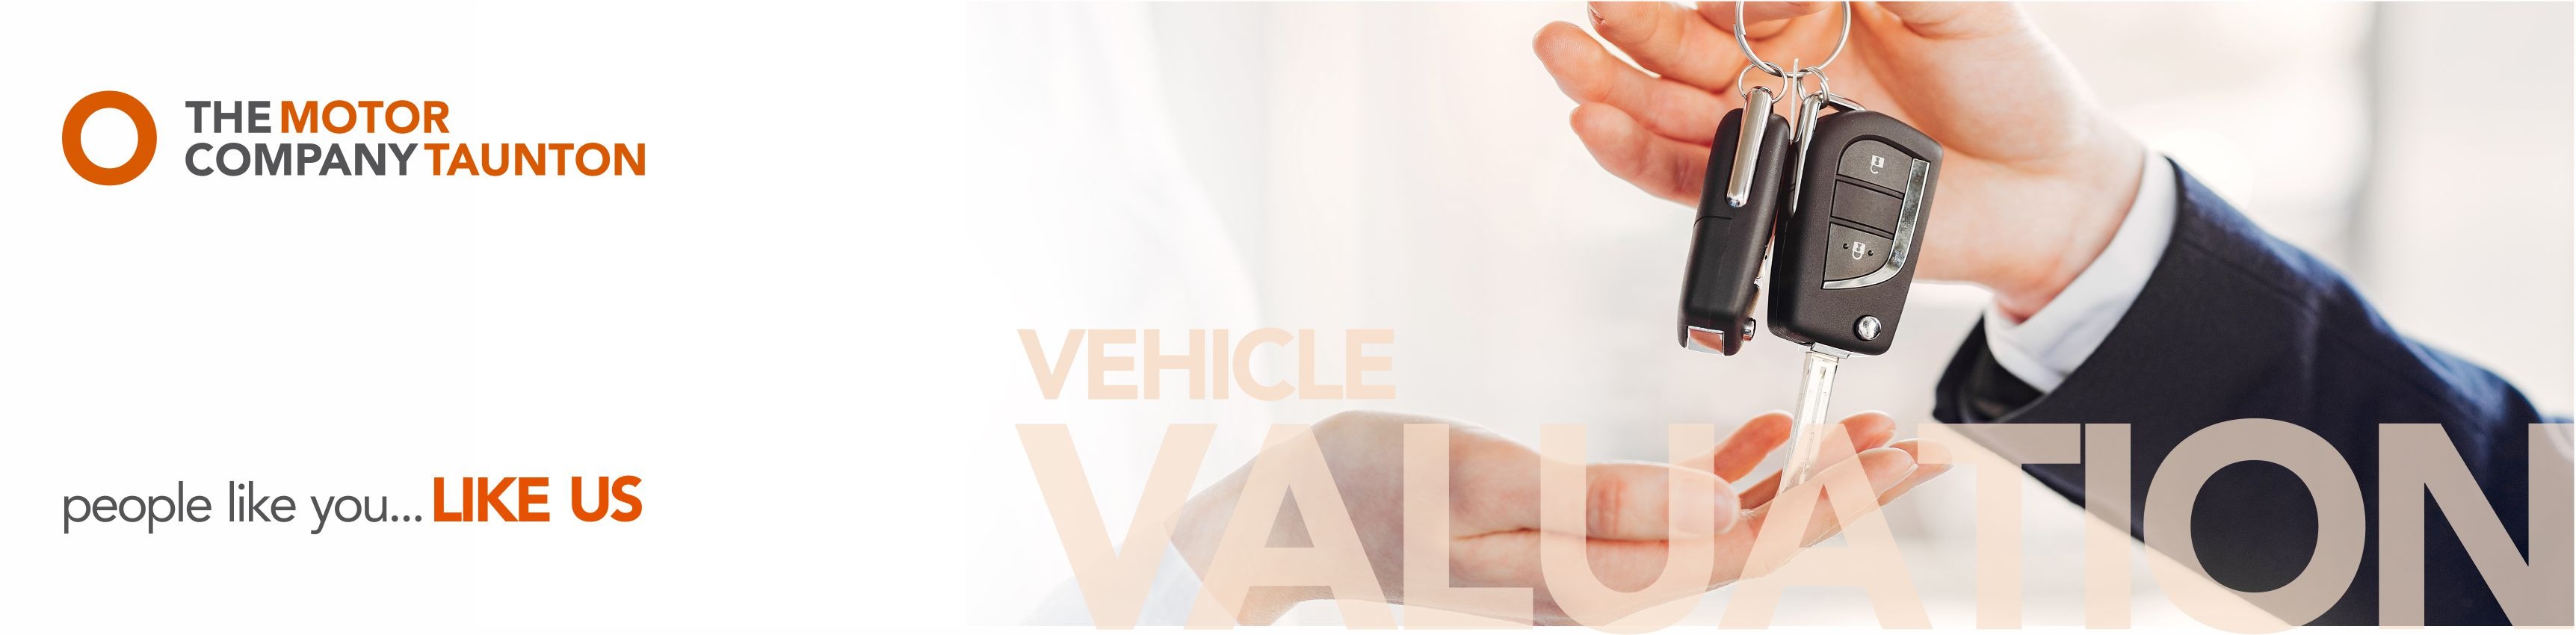 Vehicle Valuation at The Motor Company Taunton